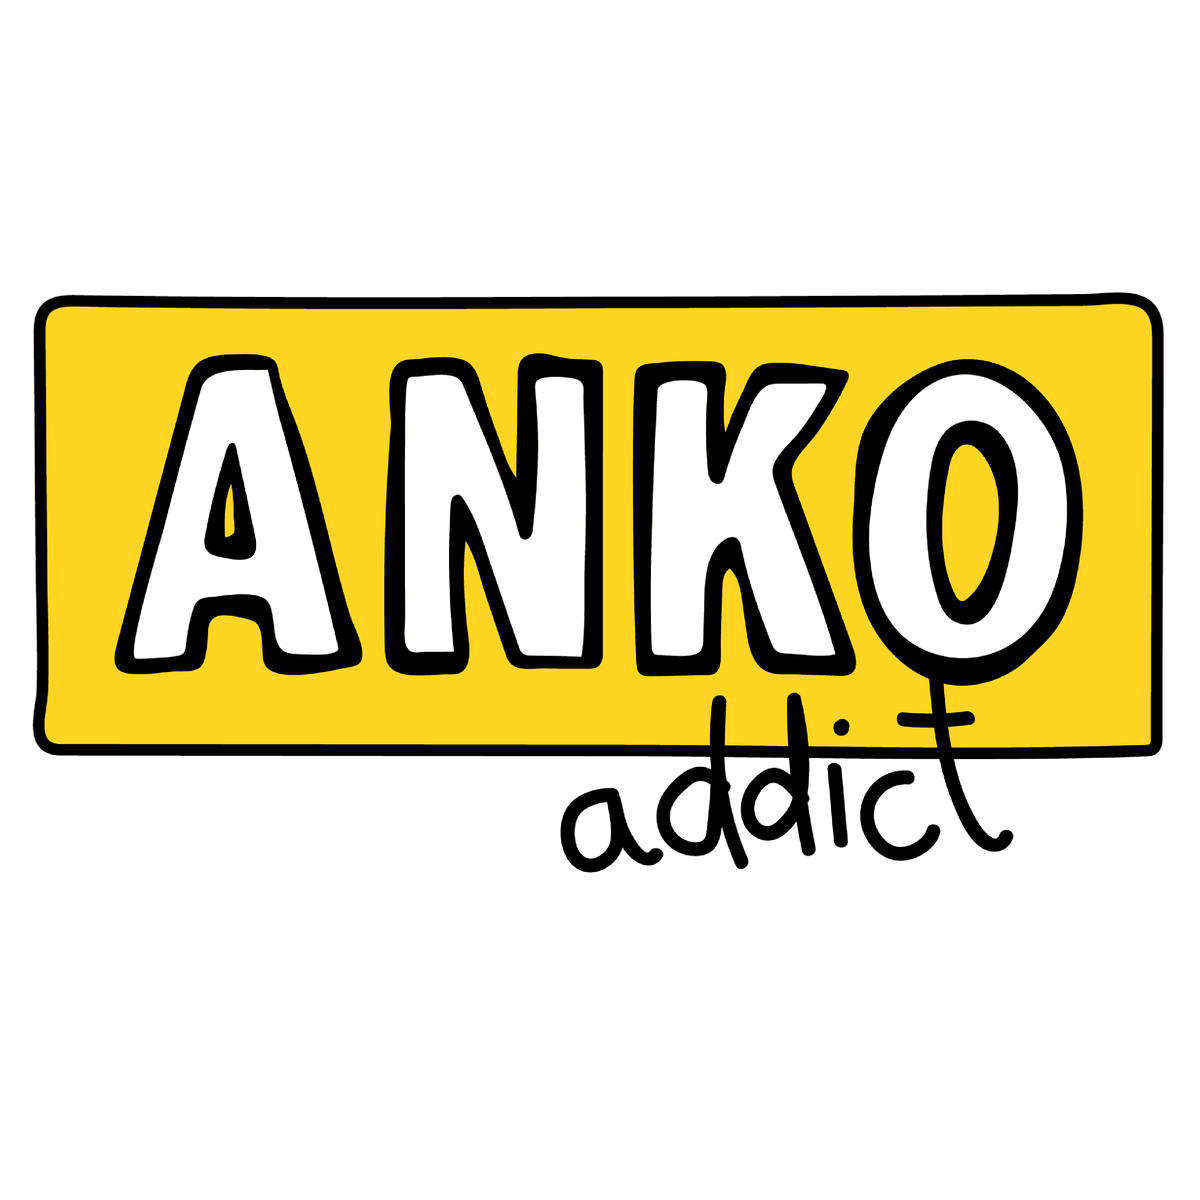 ANKO Addict 💉 - Tank